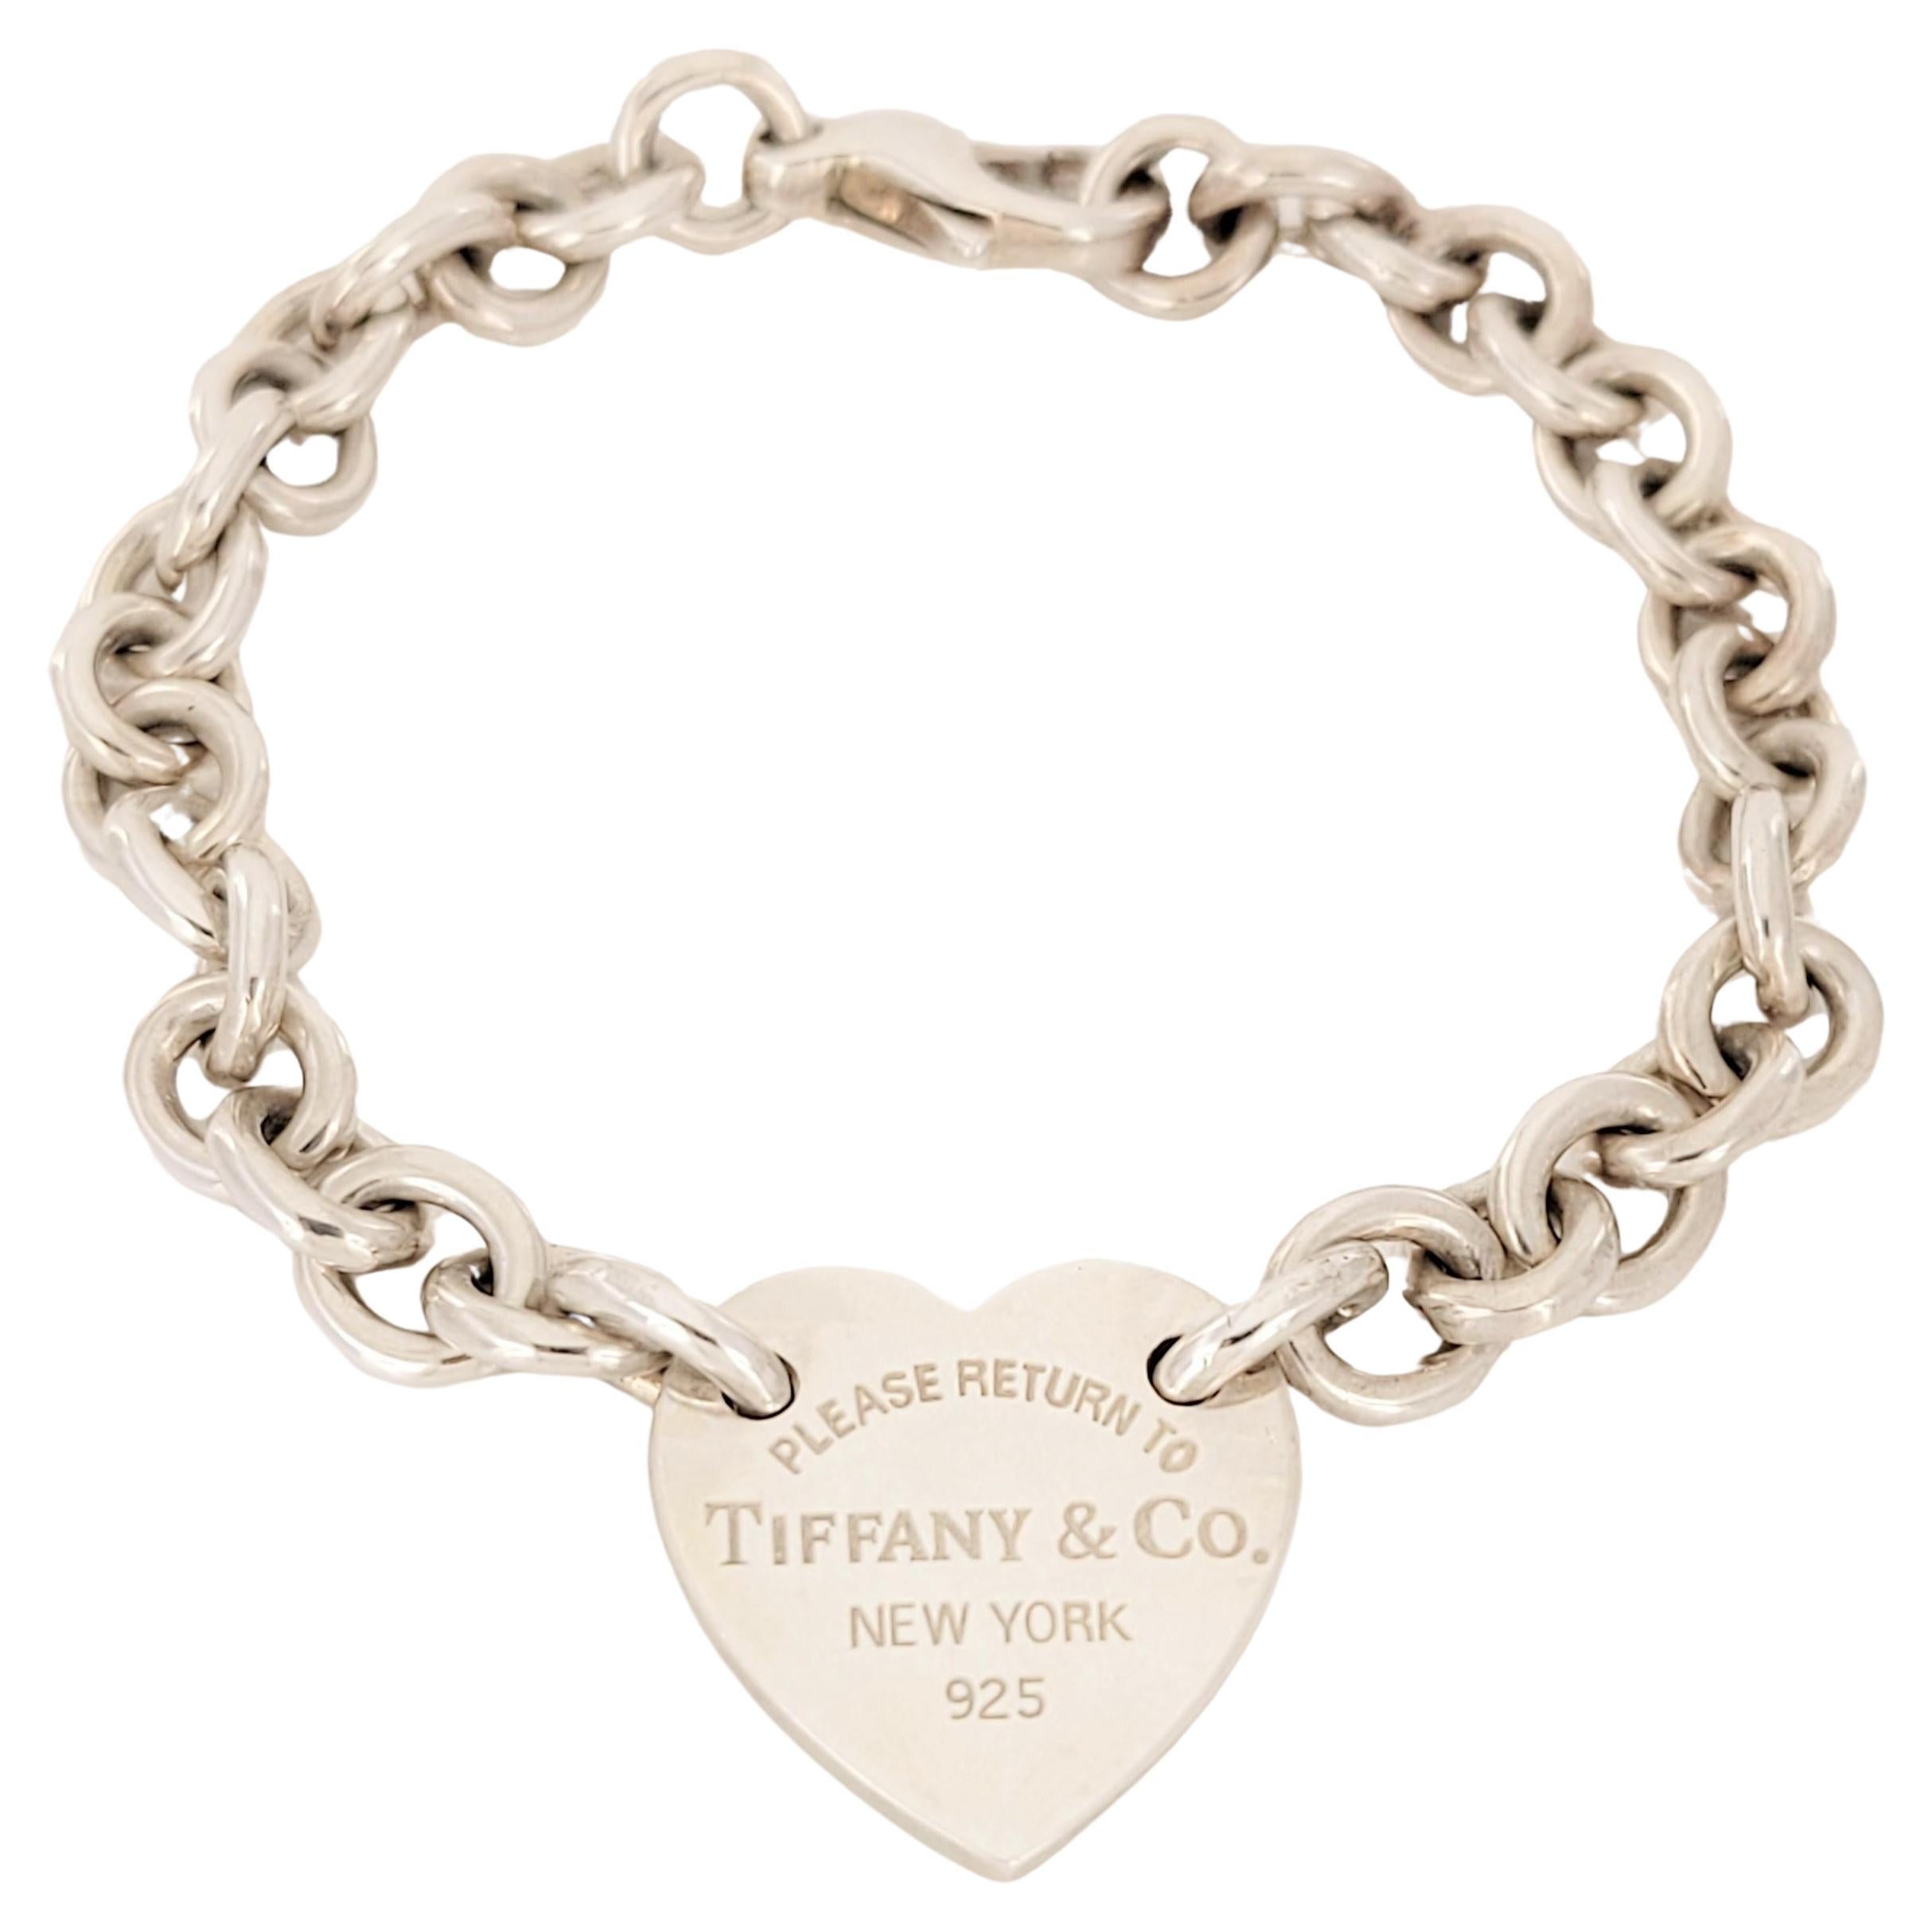 Marke Rückkehr zu Tiffany & co 
MATERIAL Sterling Silber925
Armband Länge 7,5'' lang
Armband Gewicht 27,4 gr insgesamt 
Verkaufspreis 575 USD 
Kommt mit Tiffany &co Etui